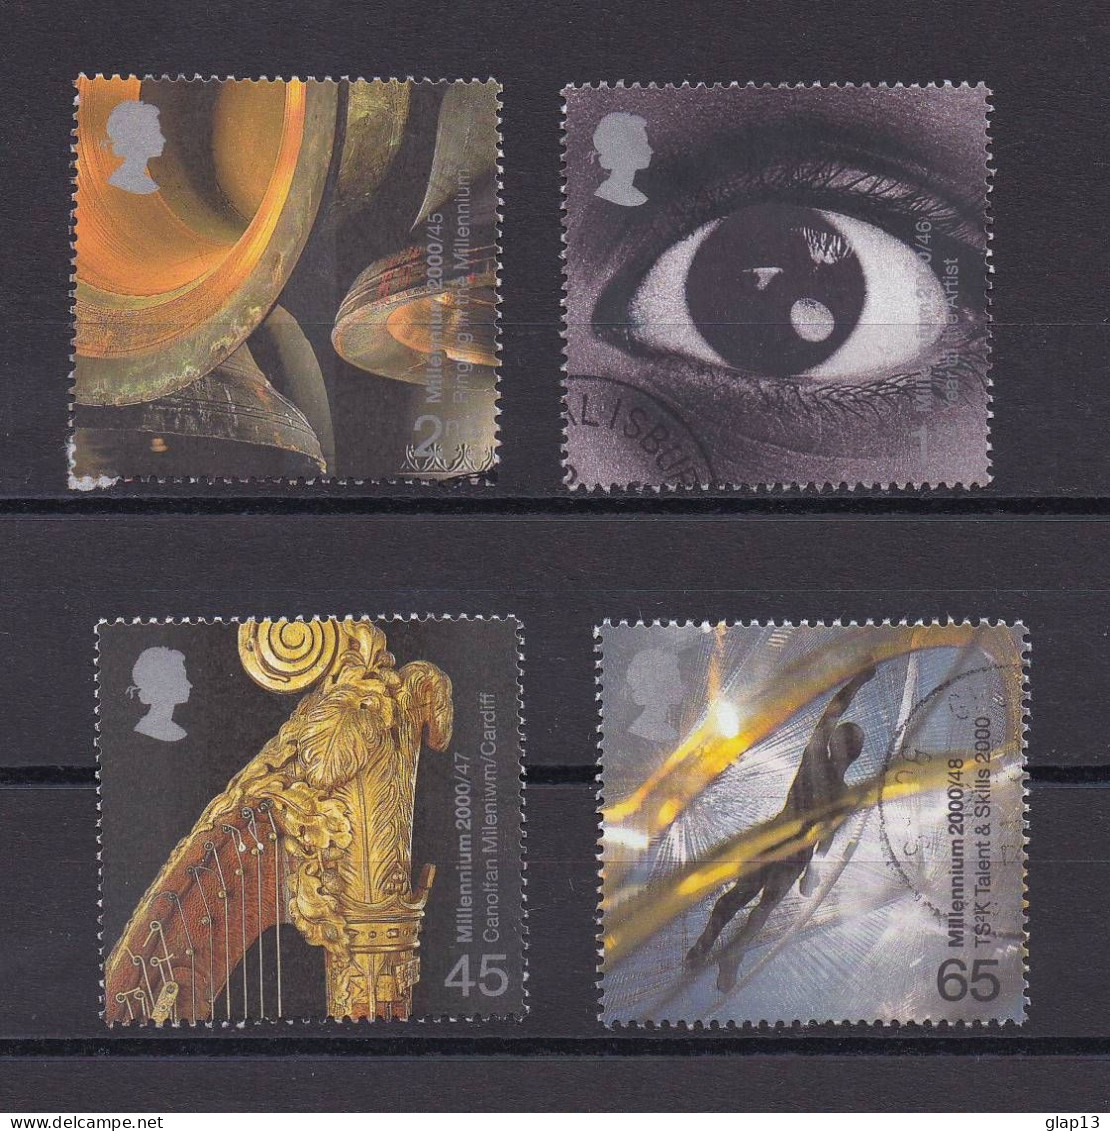 GRANDE-BRETAGNE 2000 TIMBRE N°2213/16 OBLITERE NOUVEAU MILLENAIRE - Used Stamps